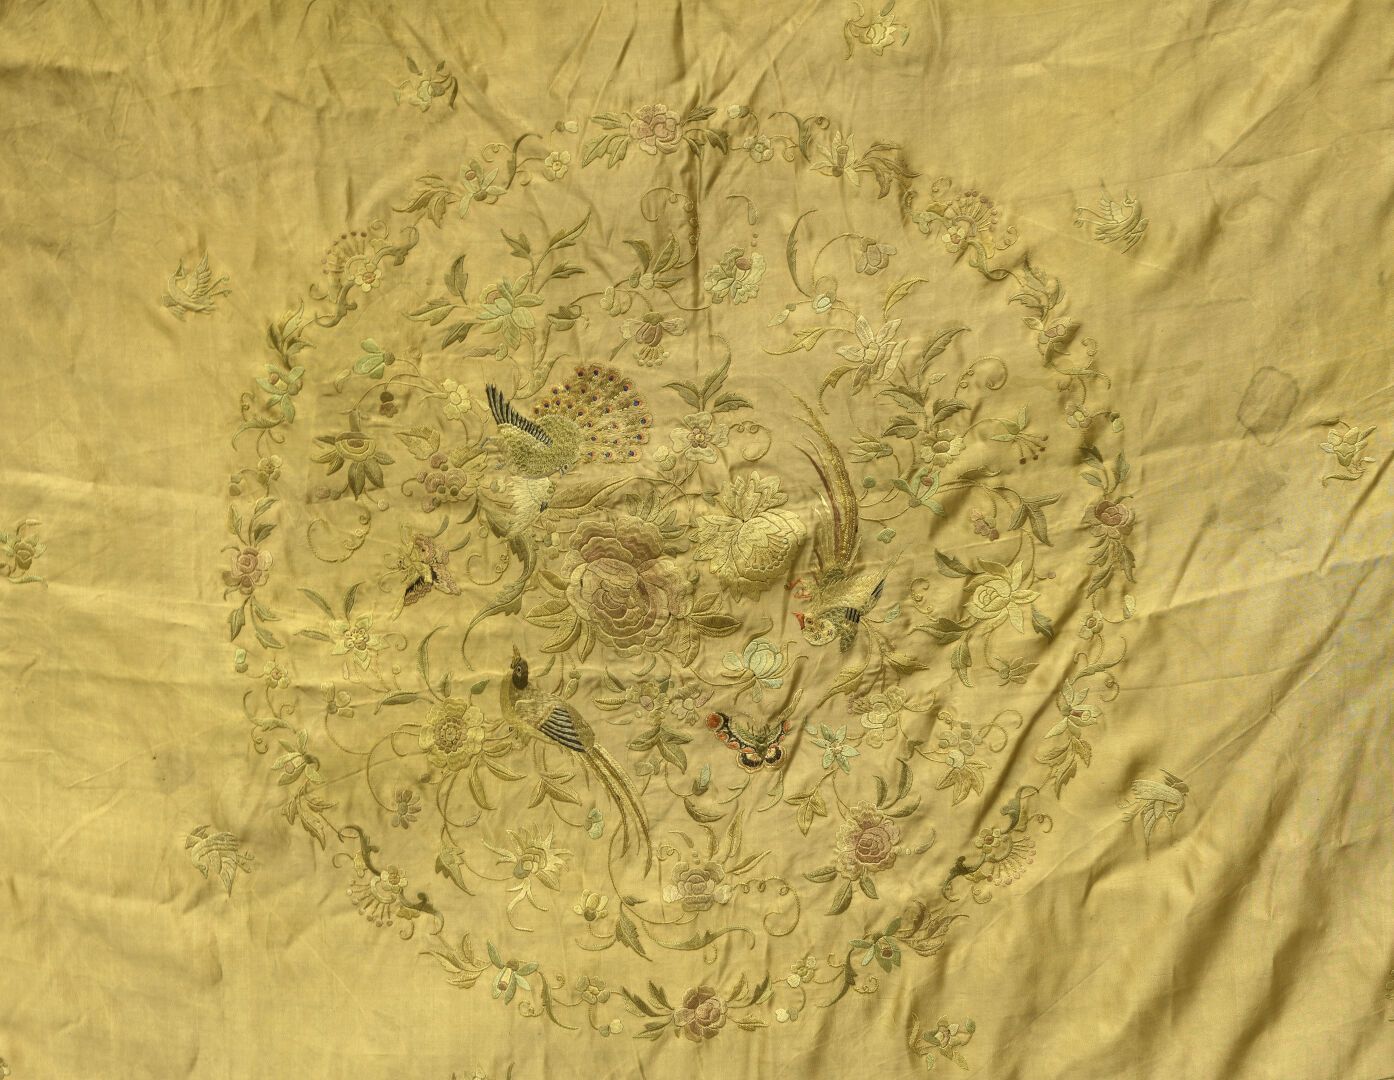 Null 大型刺绣黄丝毯
中国，19世纪末-20世纪初
中央装饰有凤凰、野鸡和花朵的图案，四角装饰有花朵和叶子，边框装饰有修饰。
225 x 240厘米